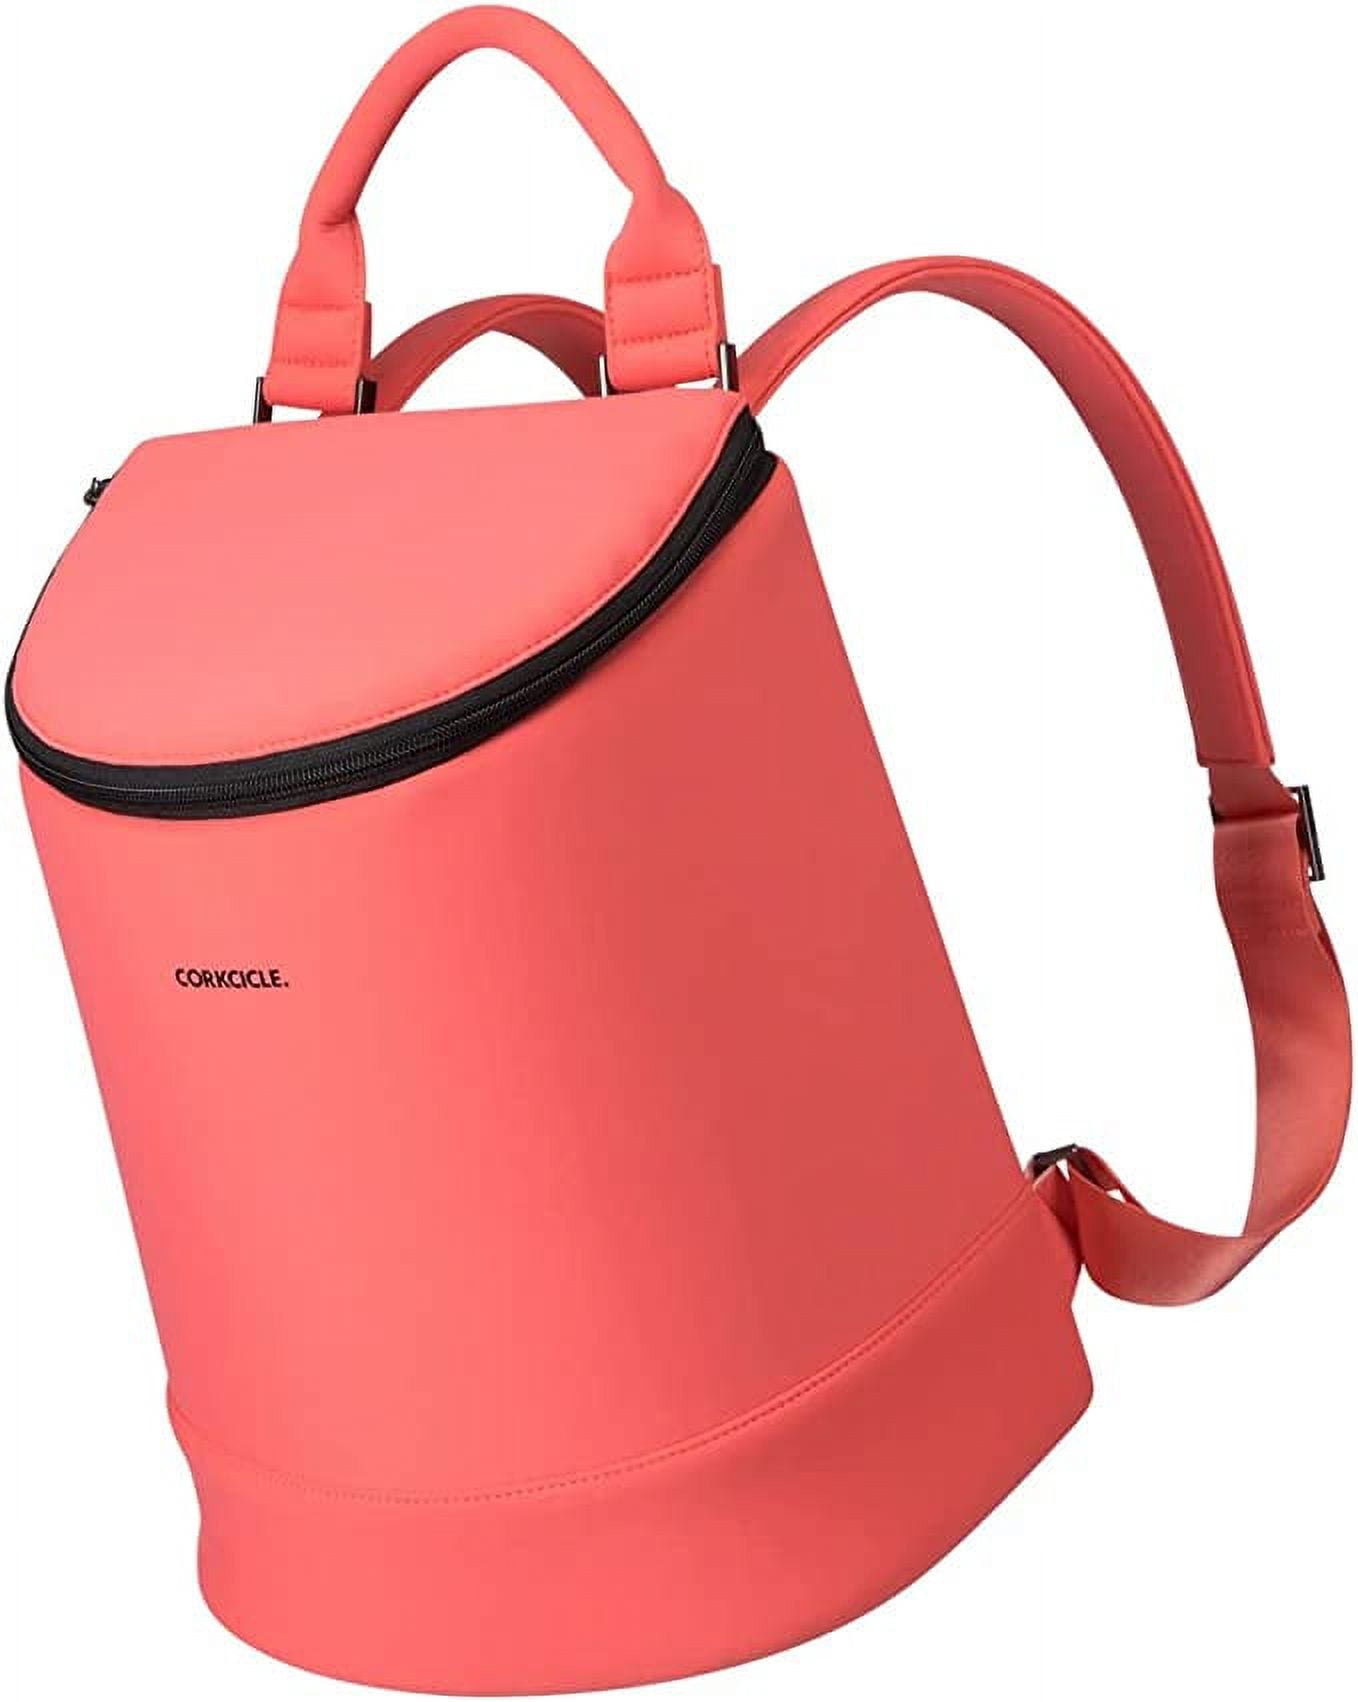 Williams Sonoma Corkcicle Eola Bucket Cooler Bag